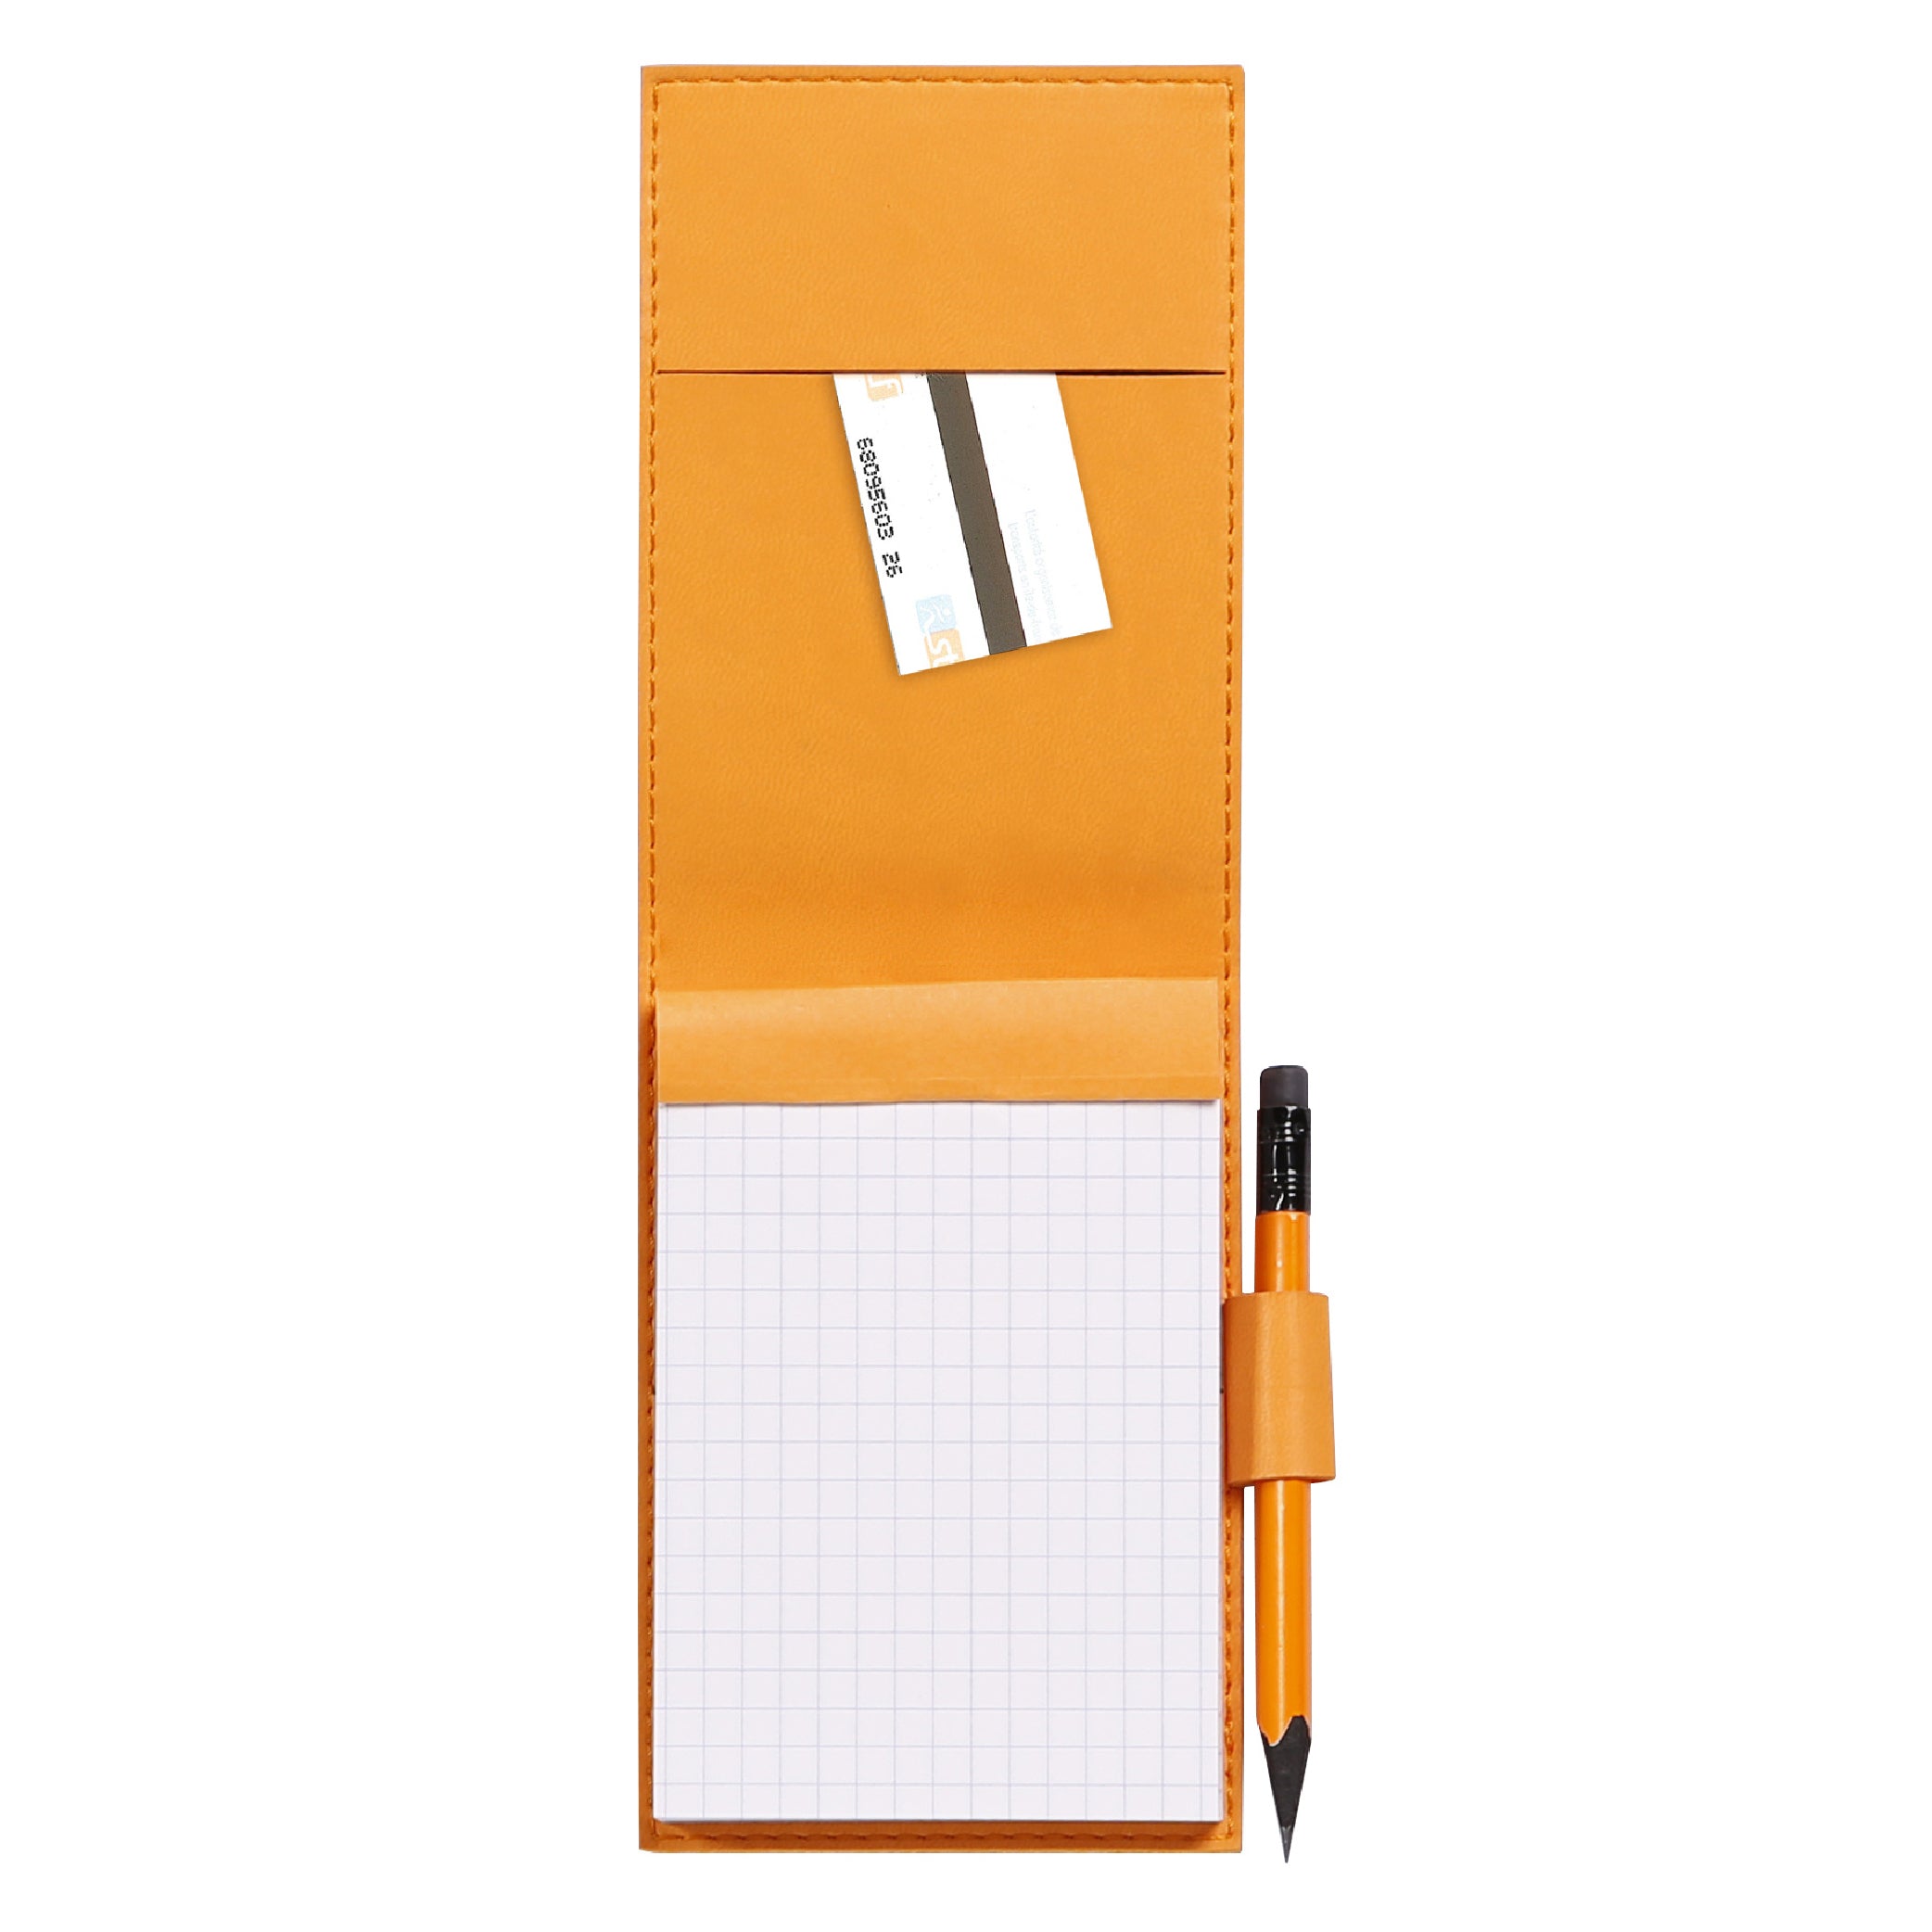 RHODIArama Notepad Cover+No.11 5x5 Sq Poppy Default Title